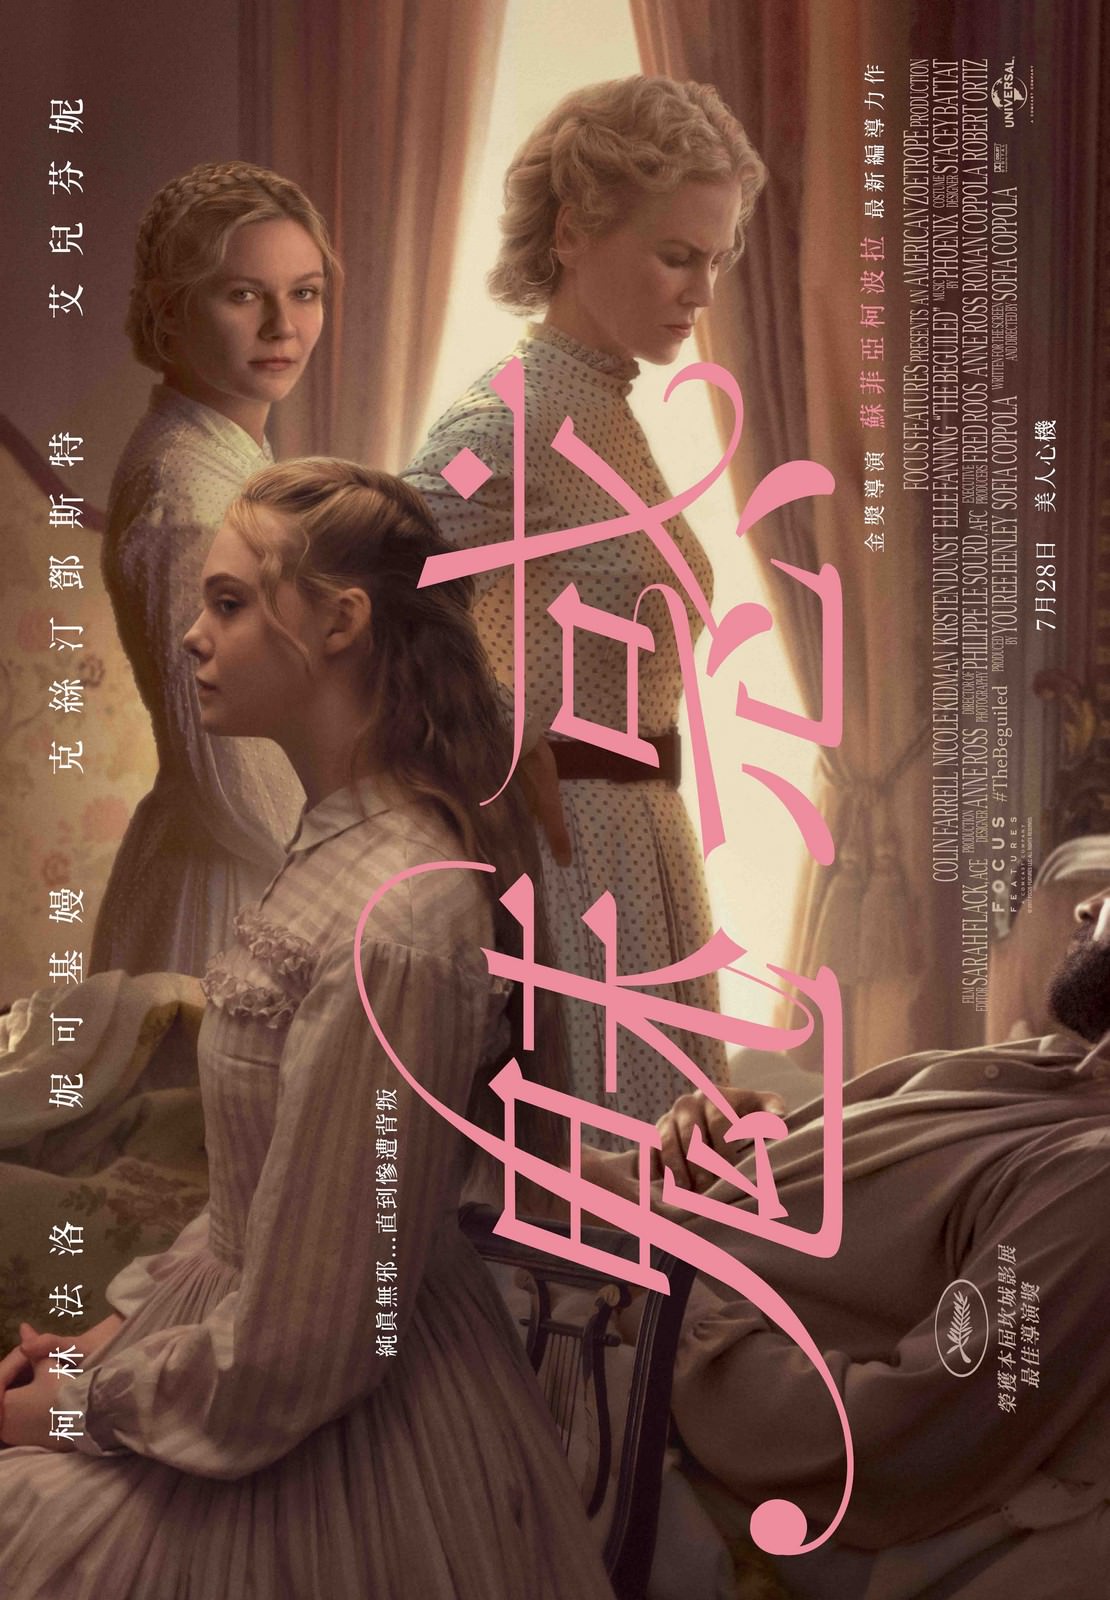 Movie, The Beguiled(美國, 2017年) / 魅惑(台灣) / 美麗有毒(香港) / 牡丹花下(網路), 電影海報, 台灣